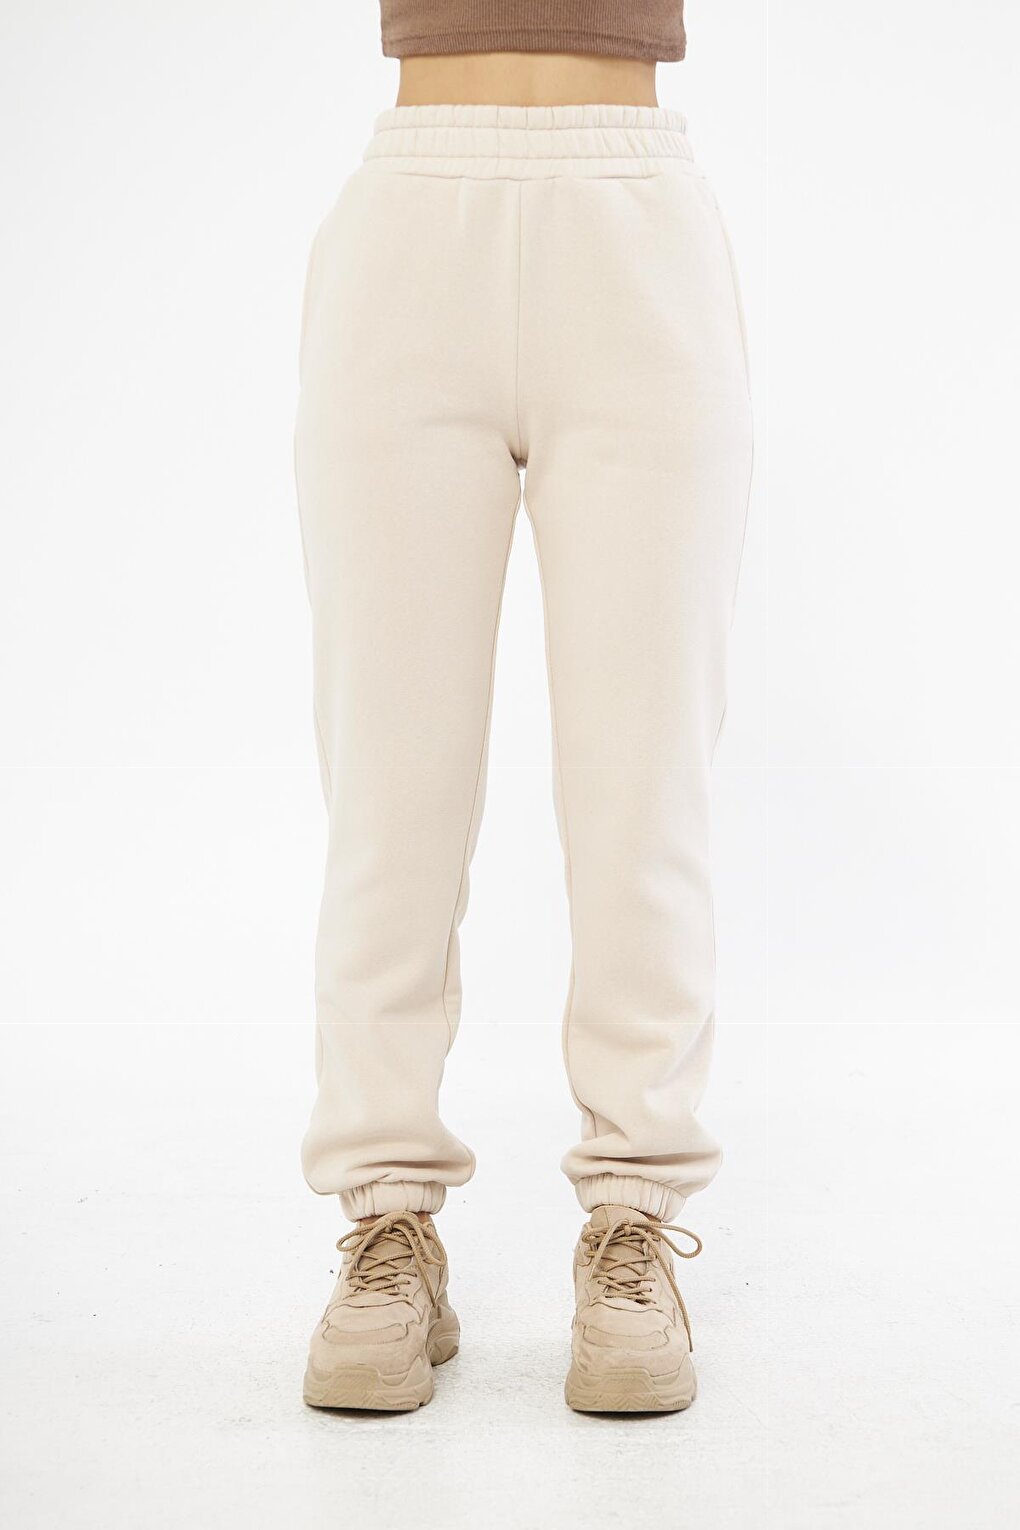 цена Бежевые женские спортивные штаны на резинке Chandraswear